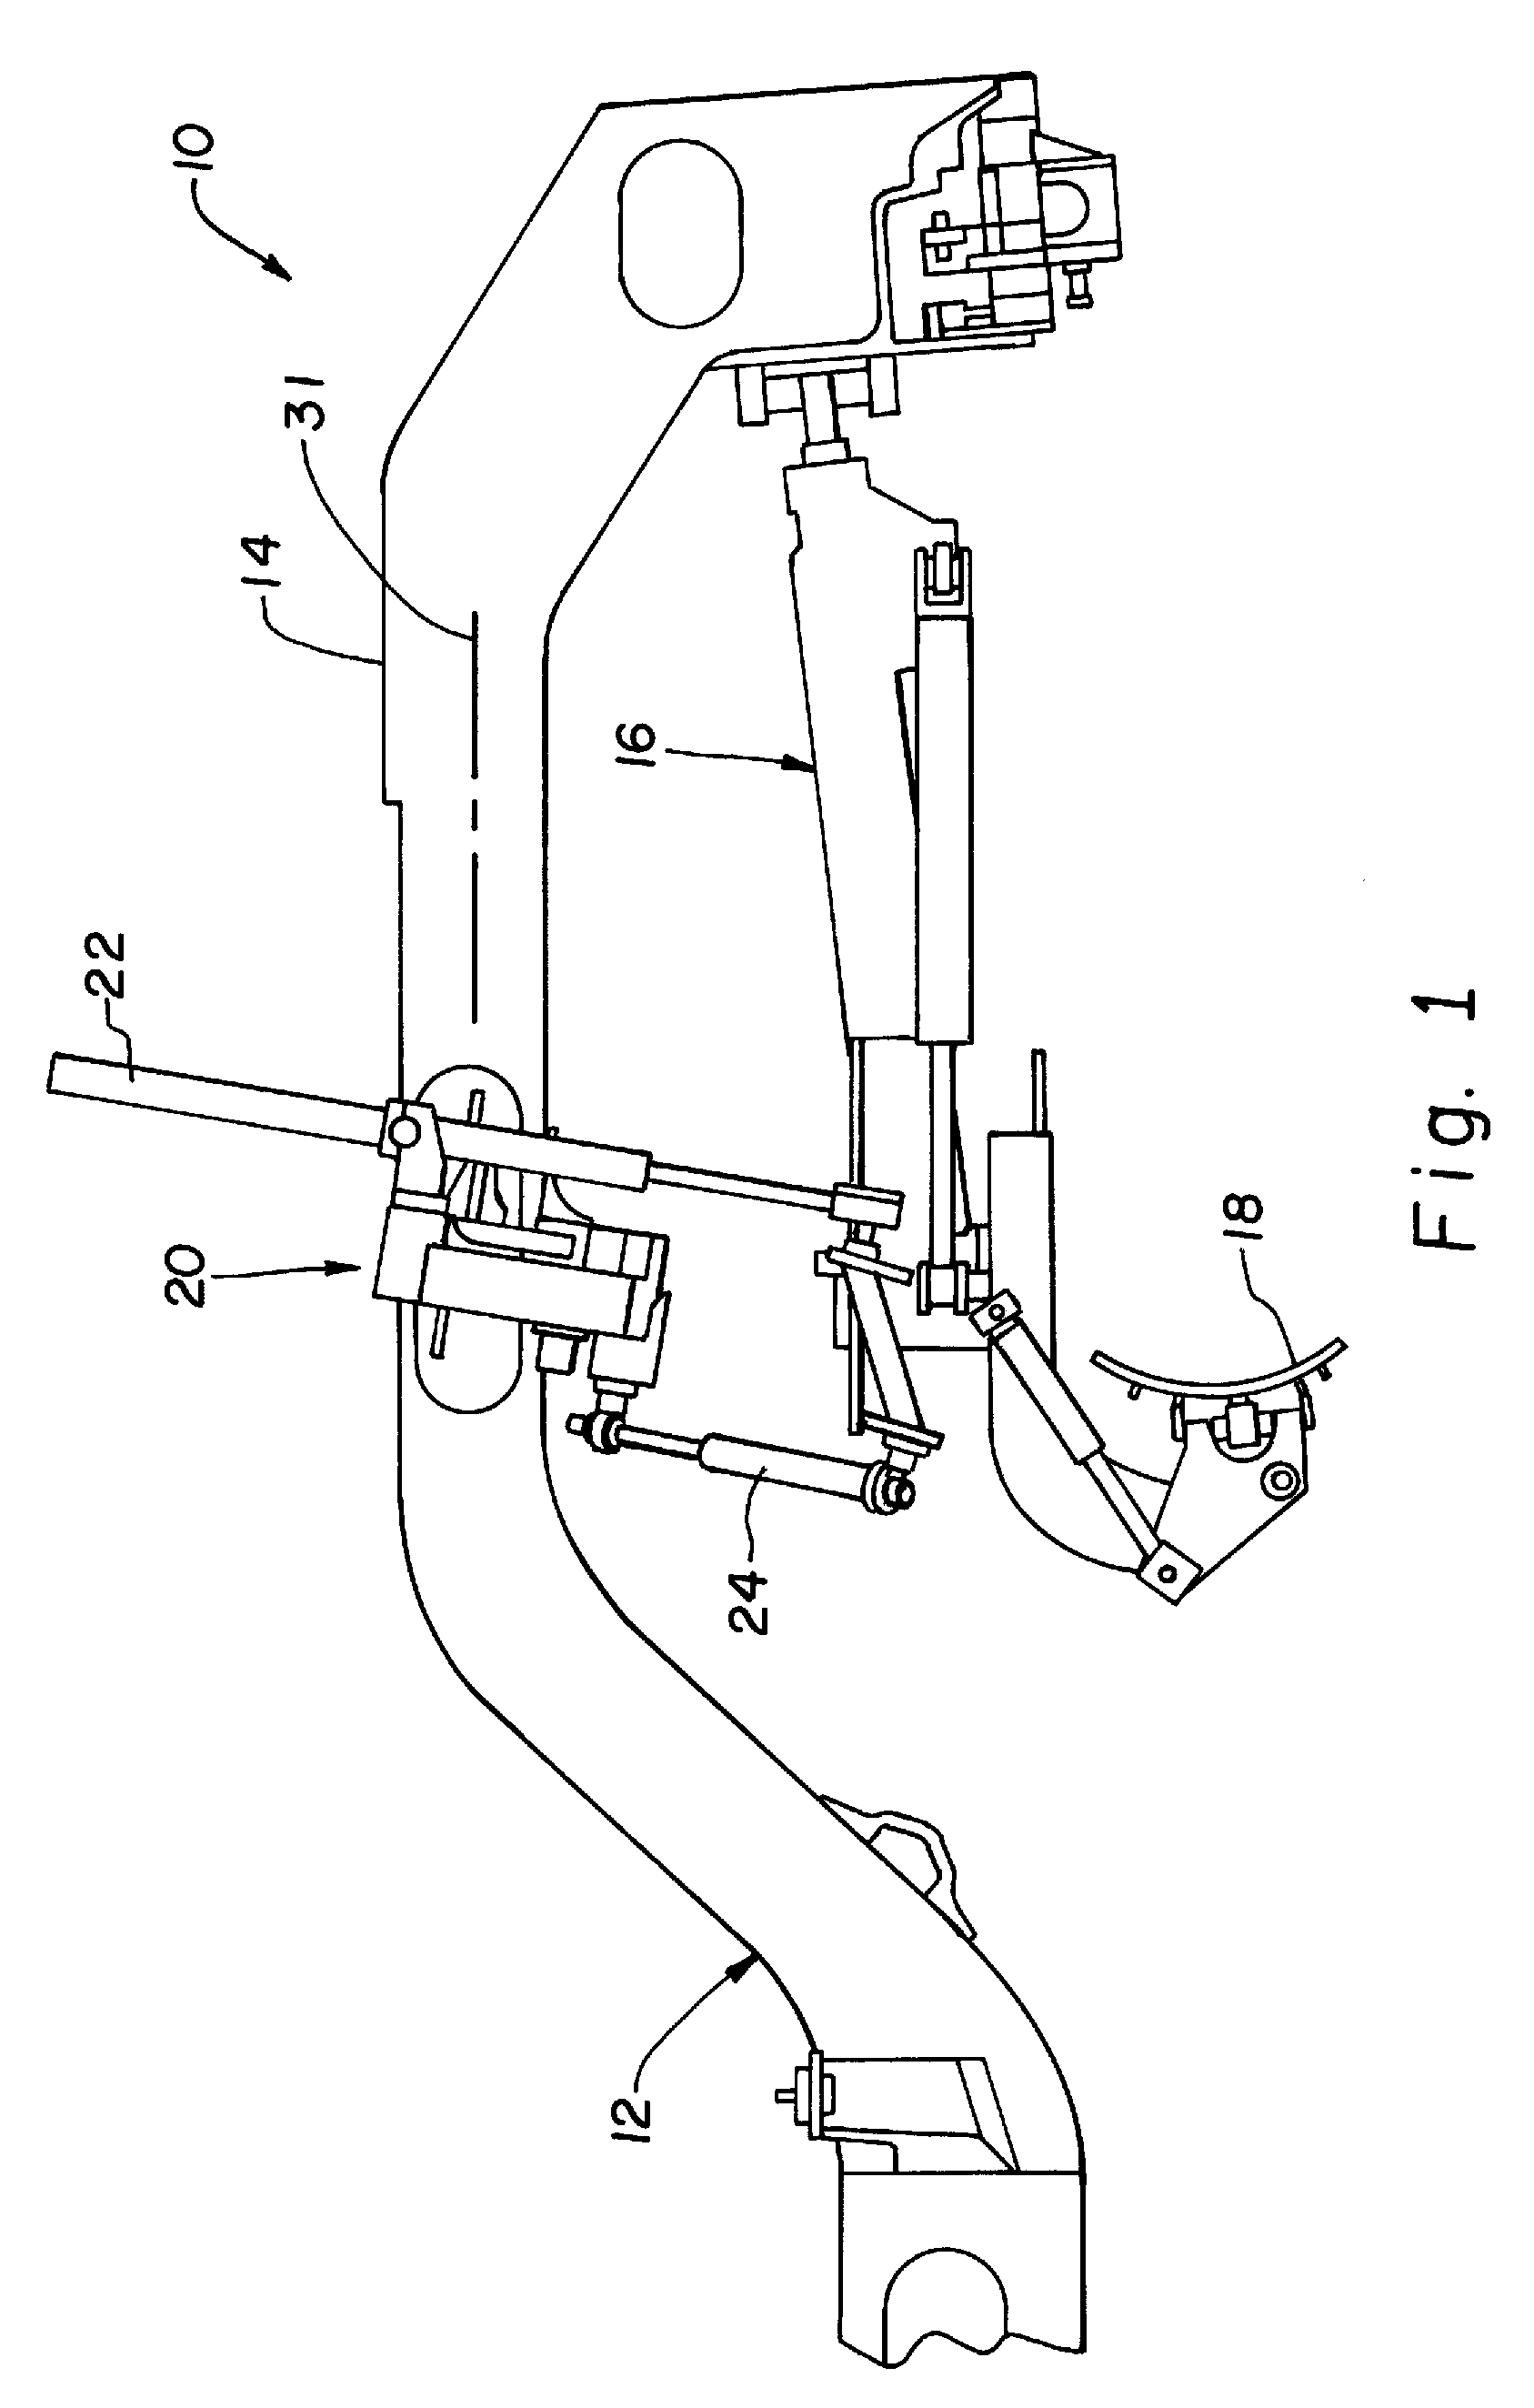 Bottom mount blade positioning assembly for a motor grader